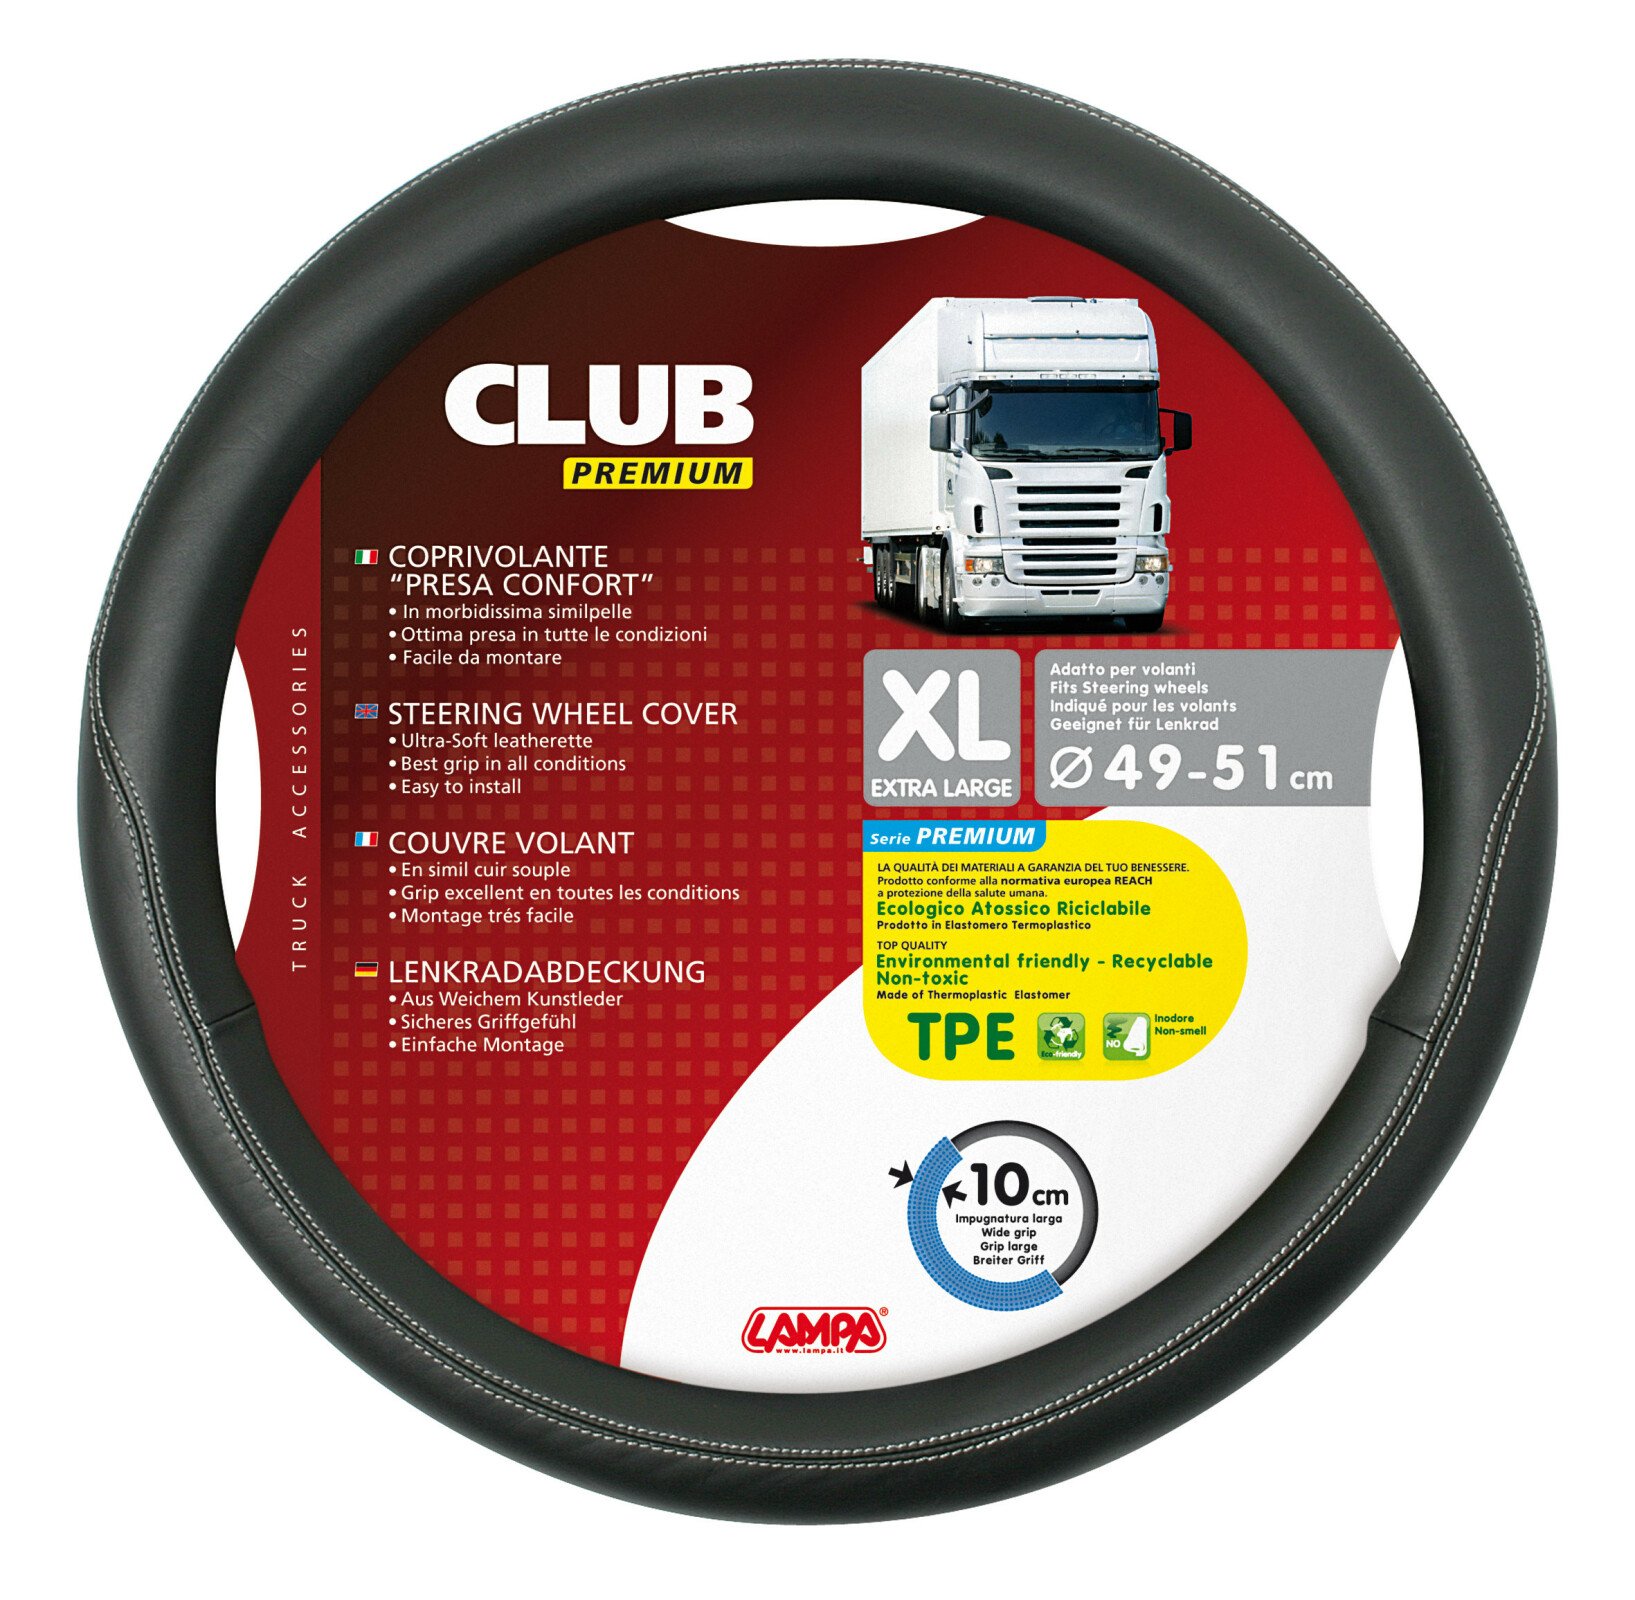 Club, comfort grip steering wheel cover - XL - Ø 49/51cm - Black thumb